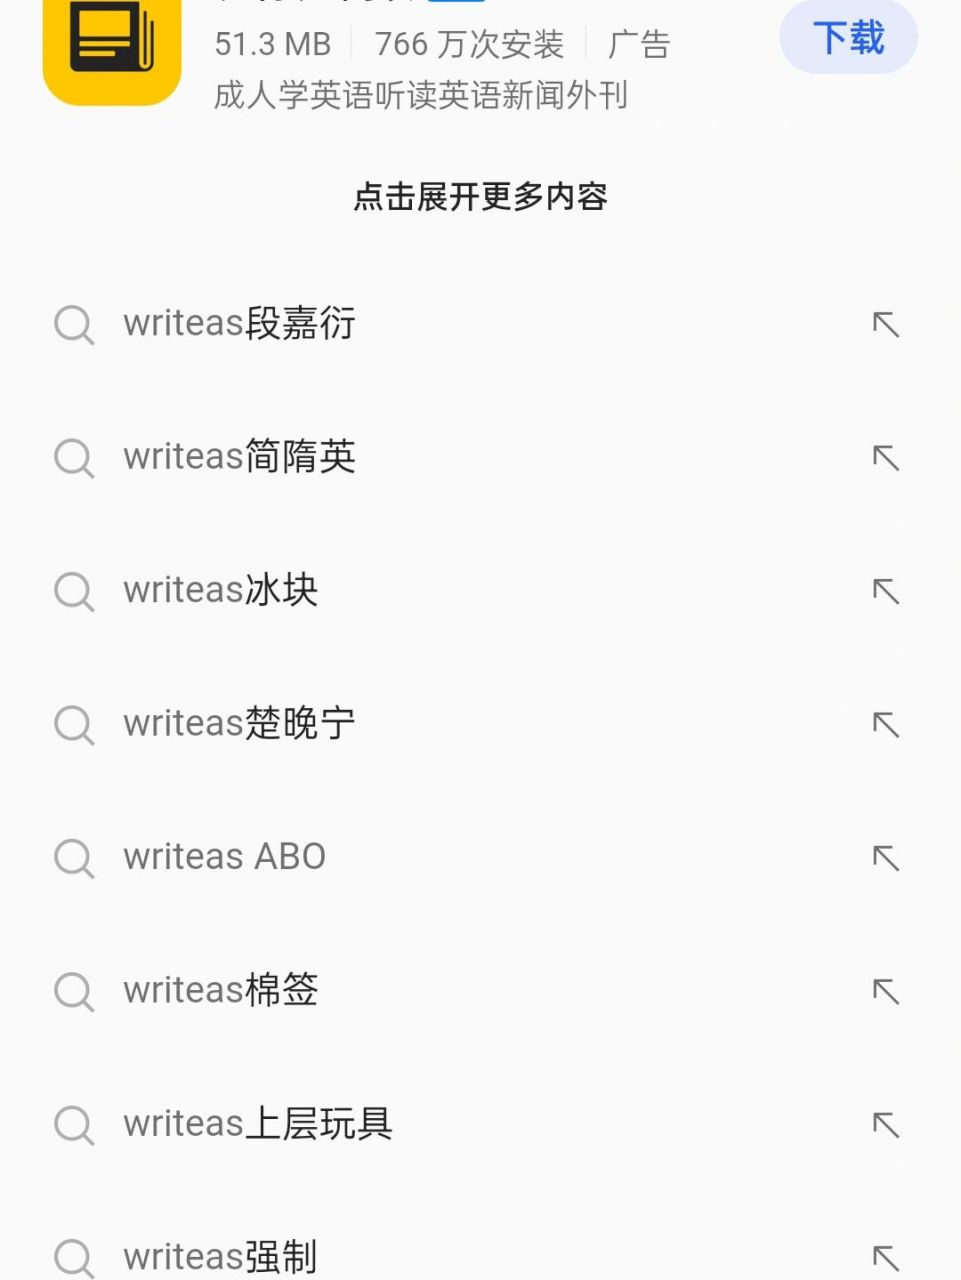 write as 含玉图片